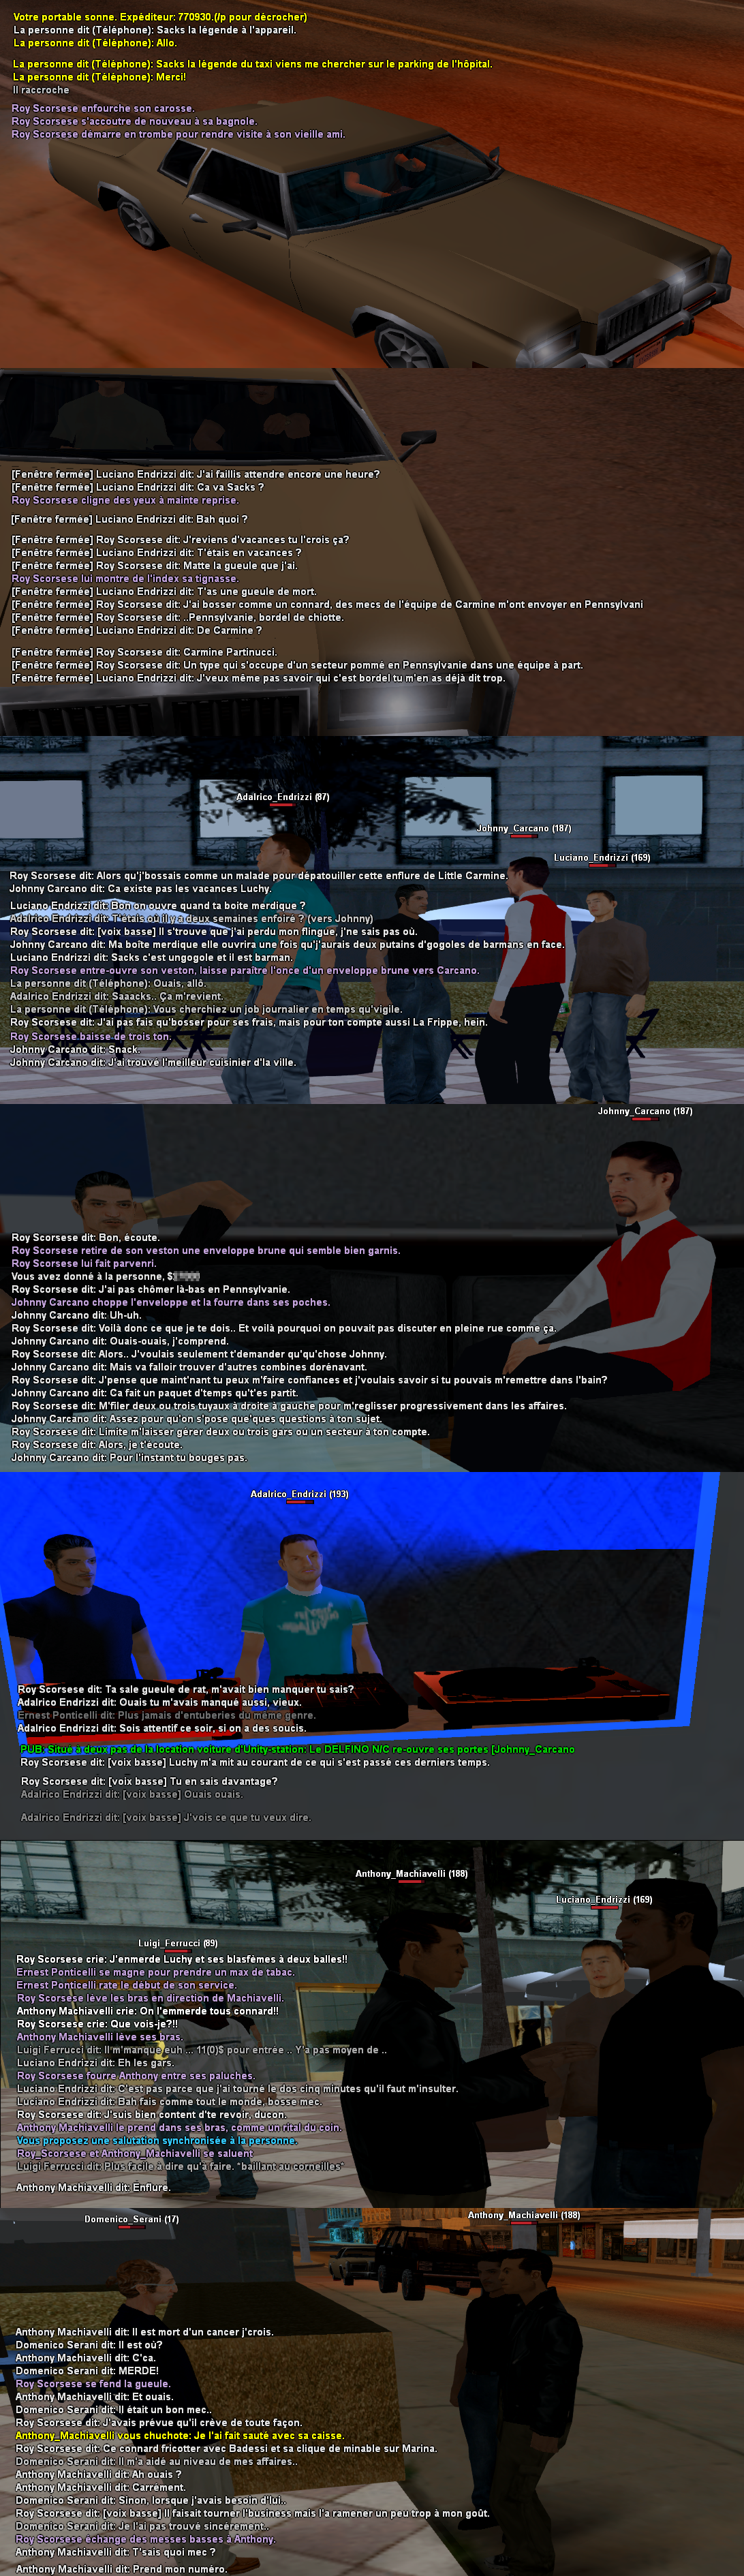 The Mazzanti Mob - Part III. - Page 4 6vpq